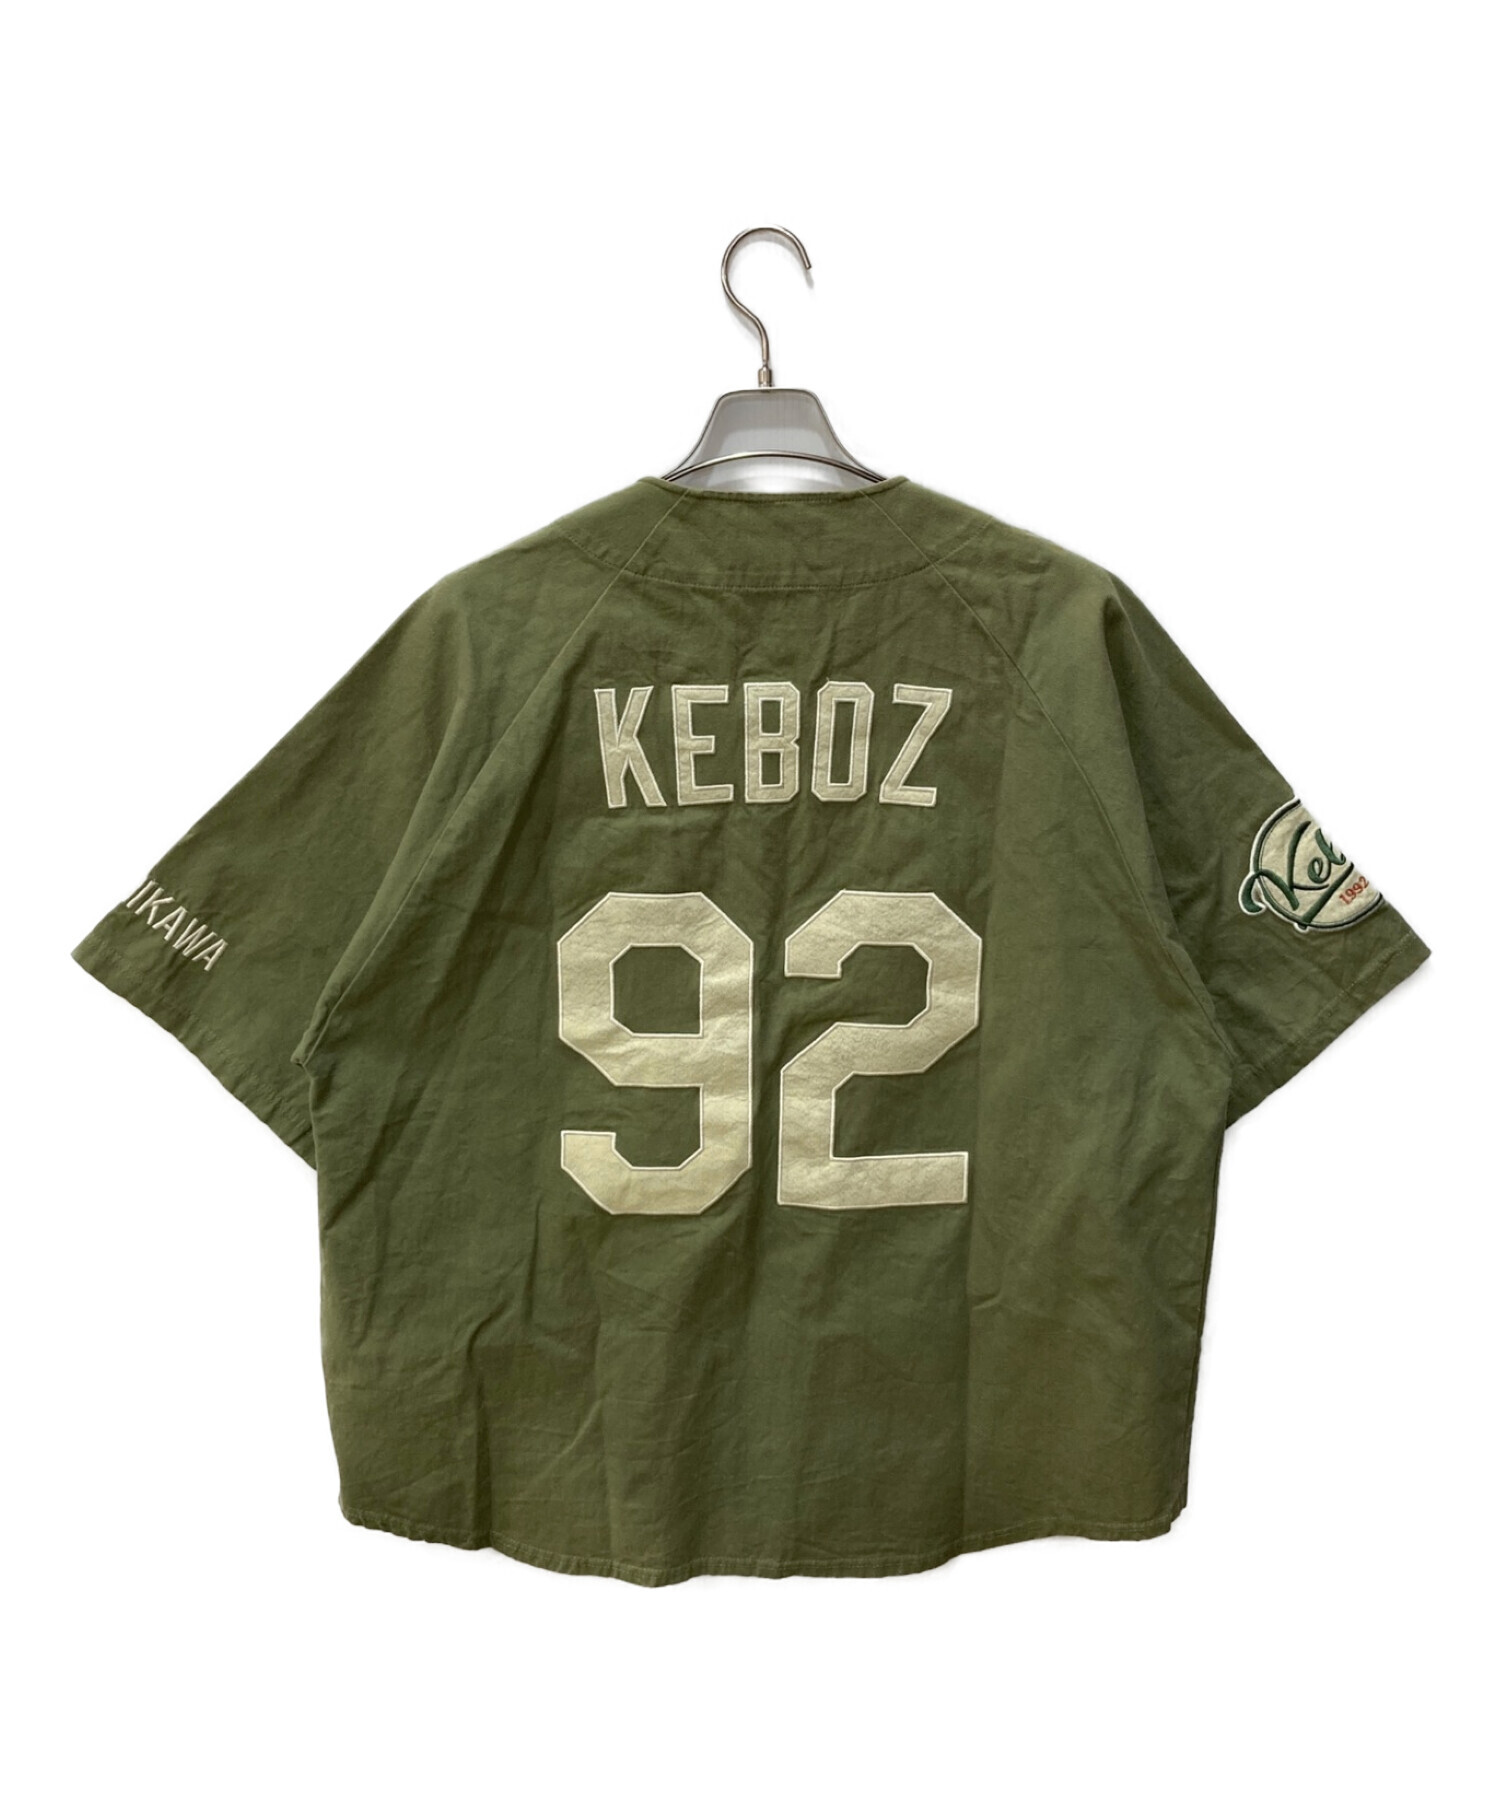 keboz ベースボールシャツ カーキ - シャツ